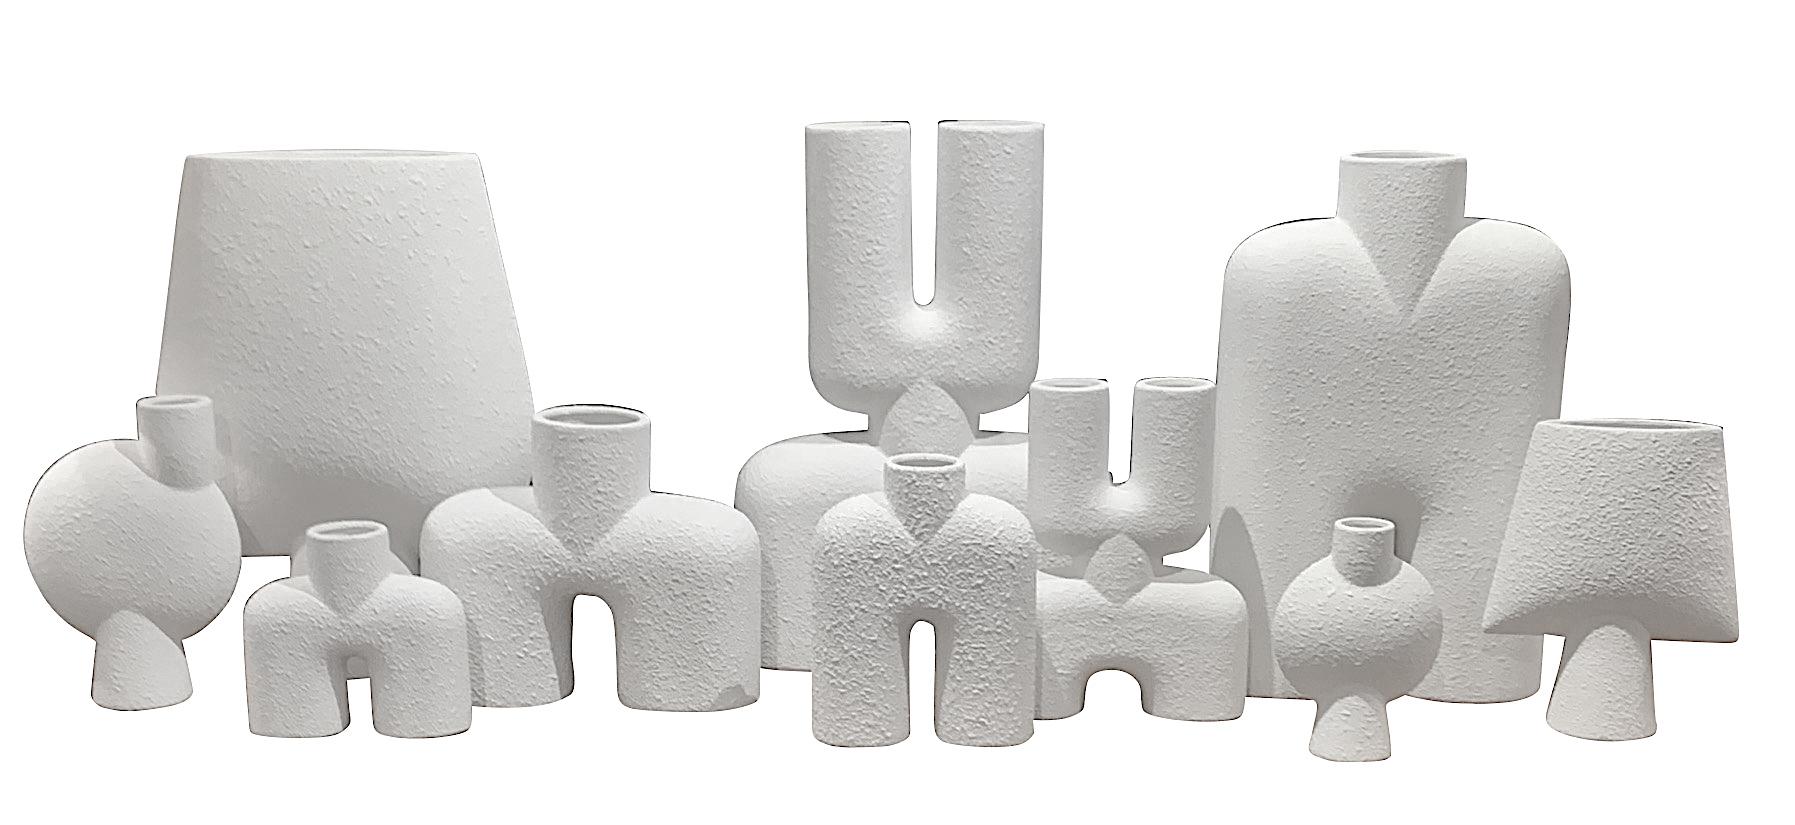 Textured White Center Spout Danish Design Vase, Denmark, Contemporary For Sale 3